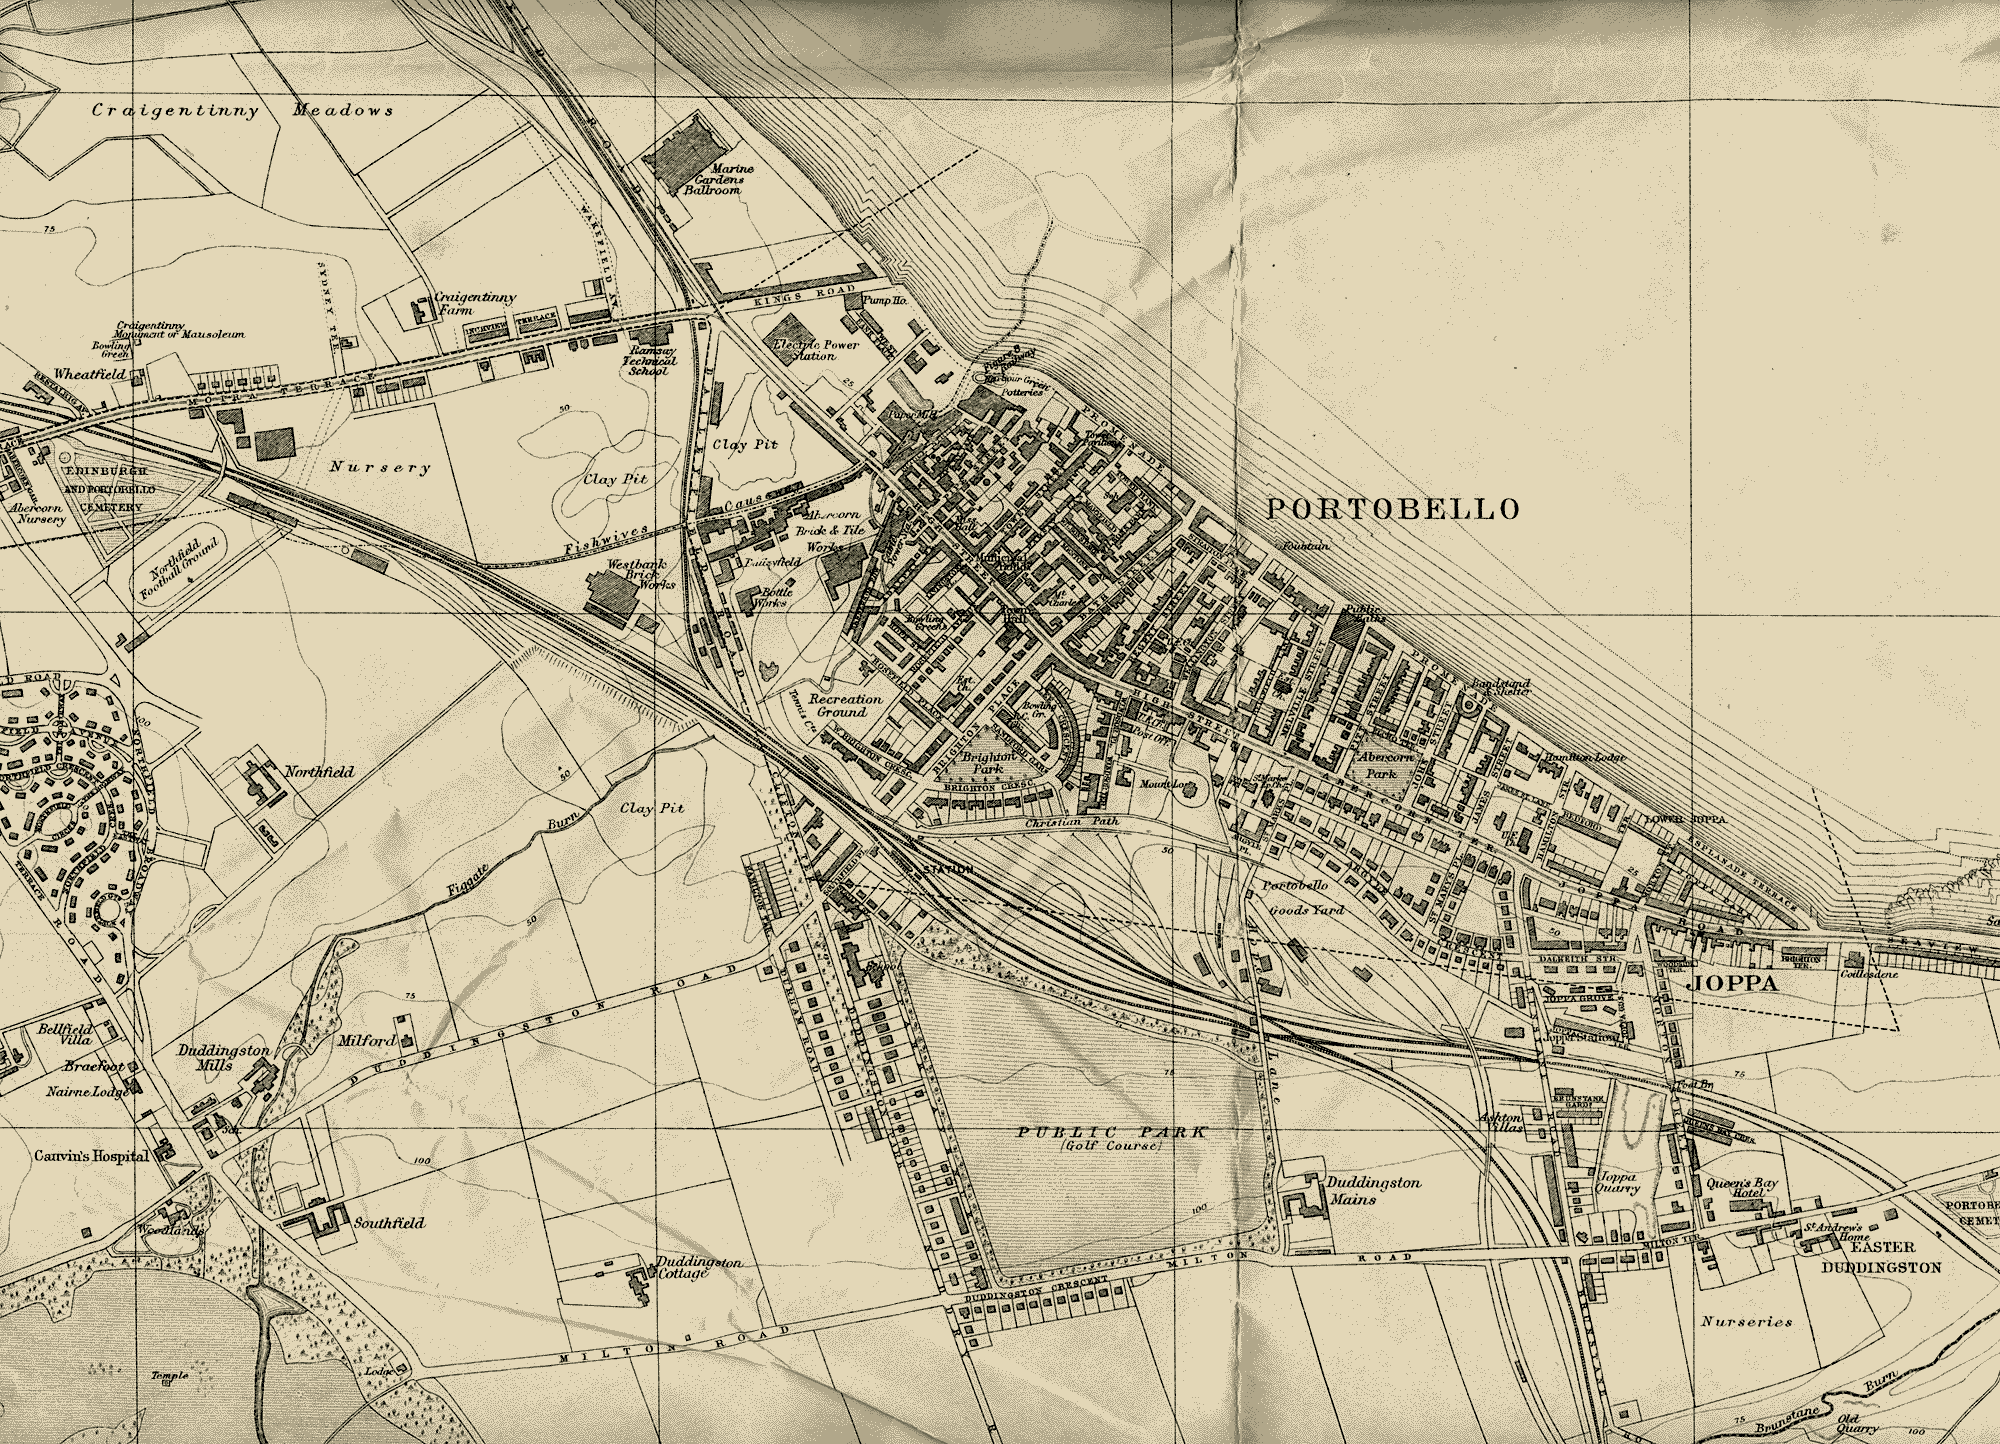 Edinburgh and Leith map, 1925  -  Porobello section  -  Enlarged